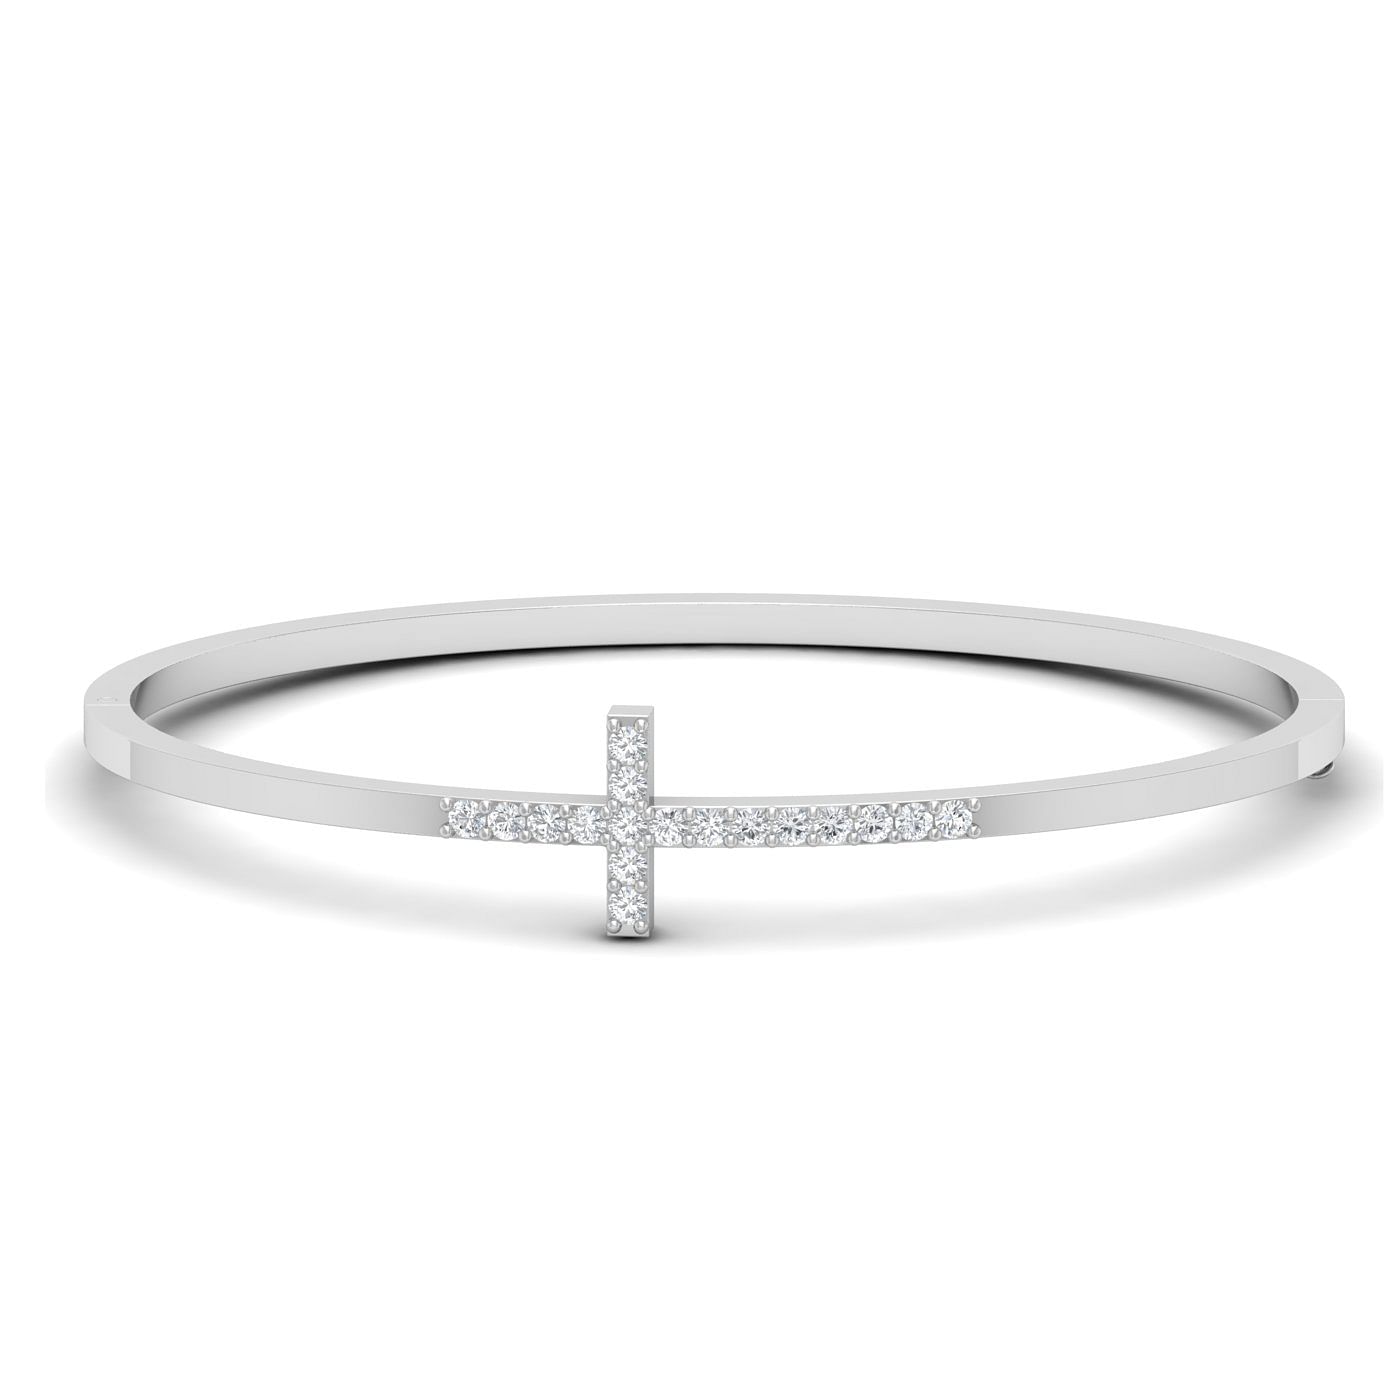 White gold Cross Contemporary Diamond Bracelet for office wear